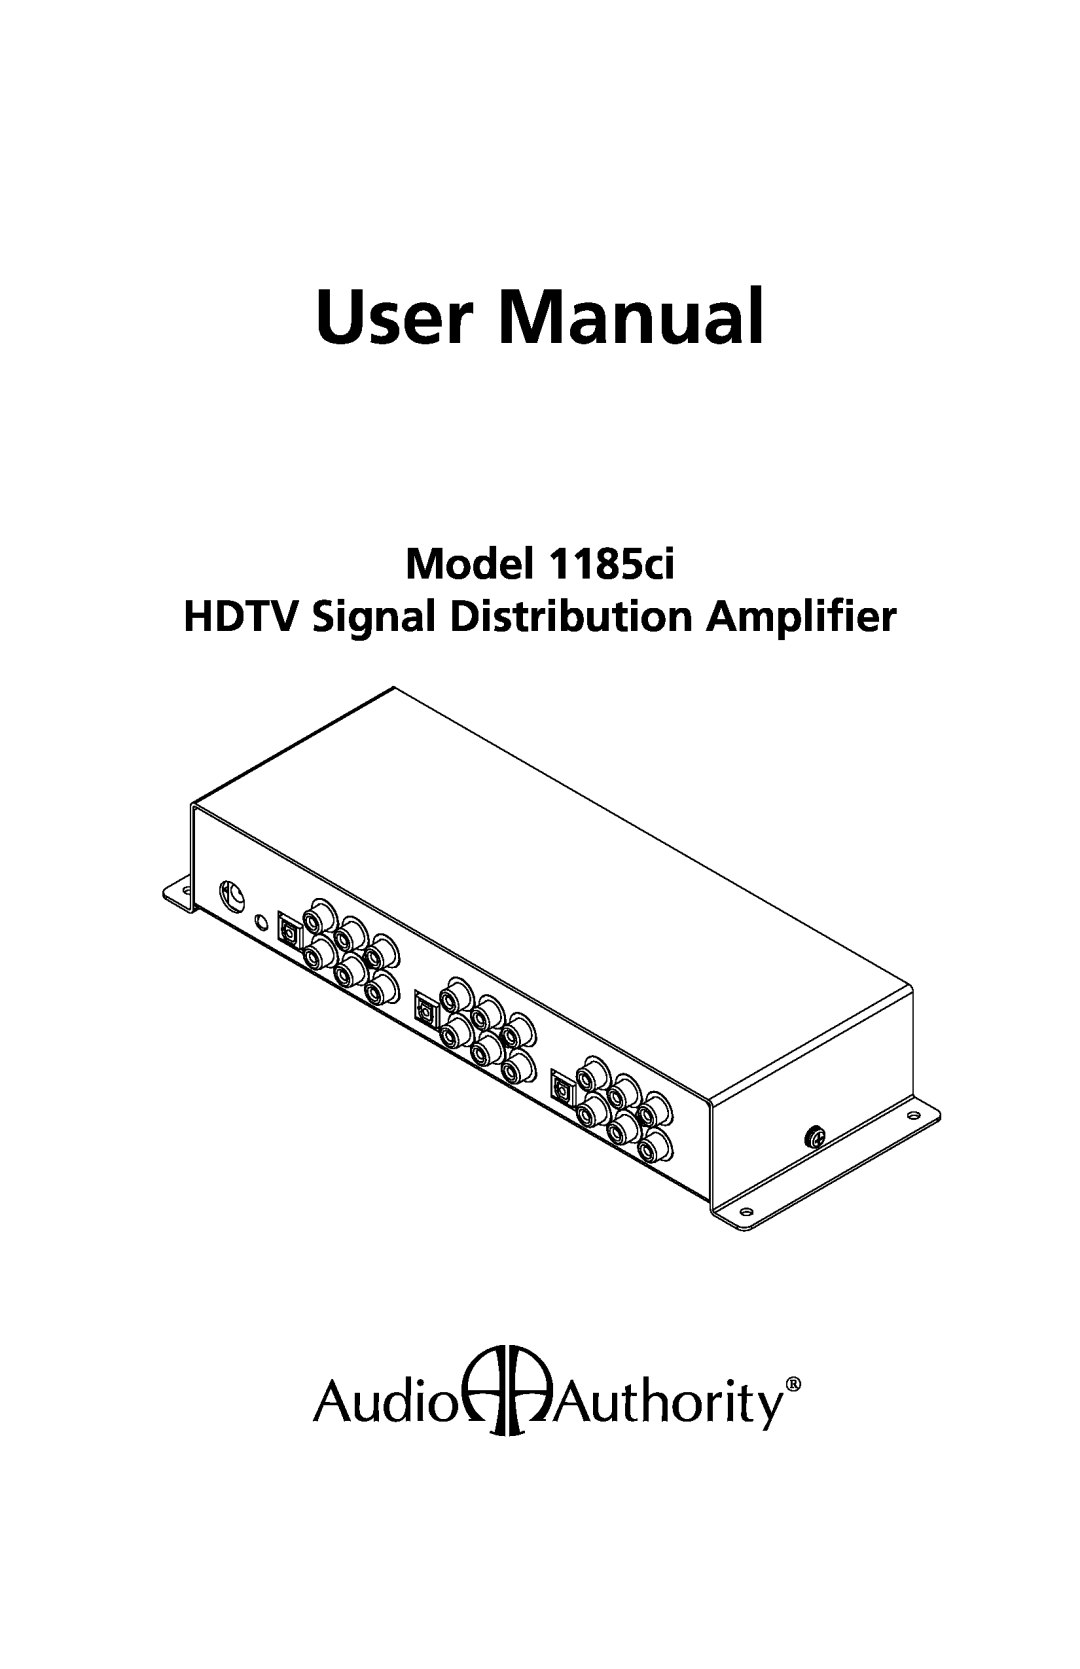 Audio Authority user manual Model 1185ci HDTV Signal Distribution Amplifier 